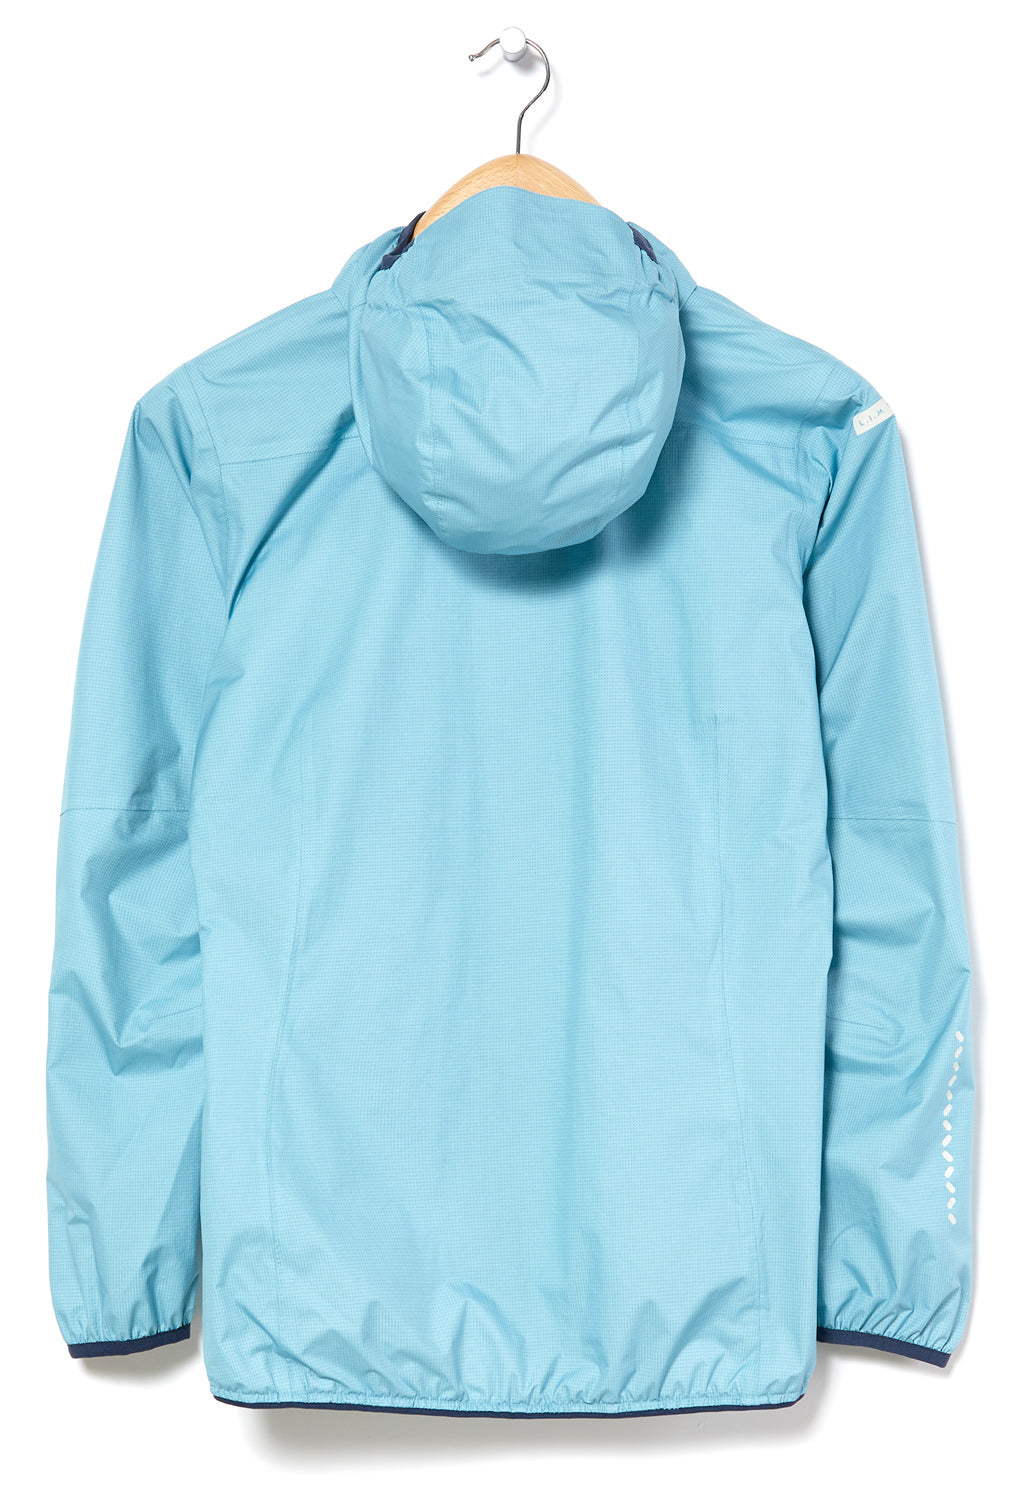 Haglöfs Women's L.I.M PROOF Jacket - Frost Blue